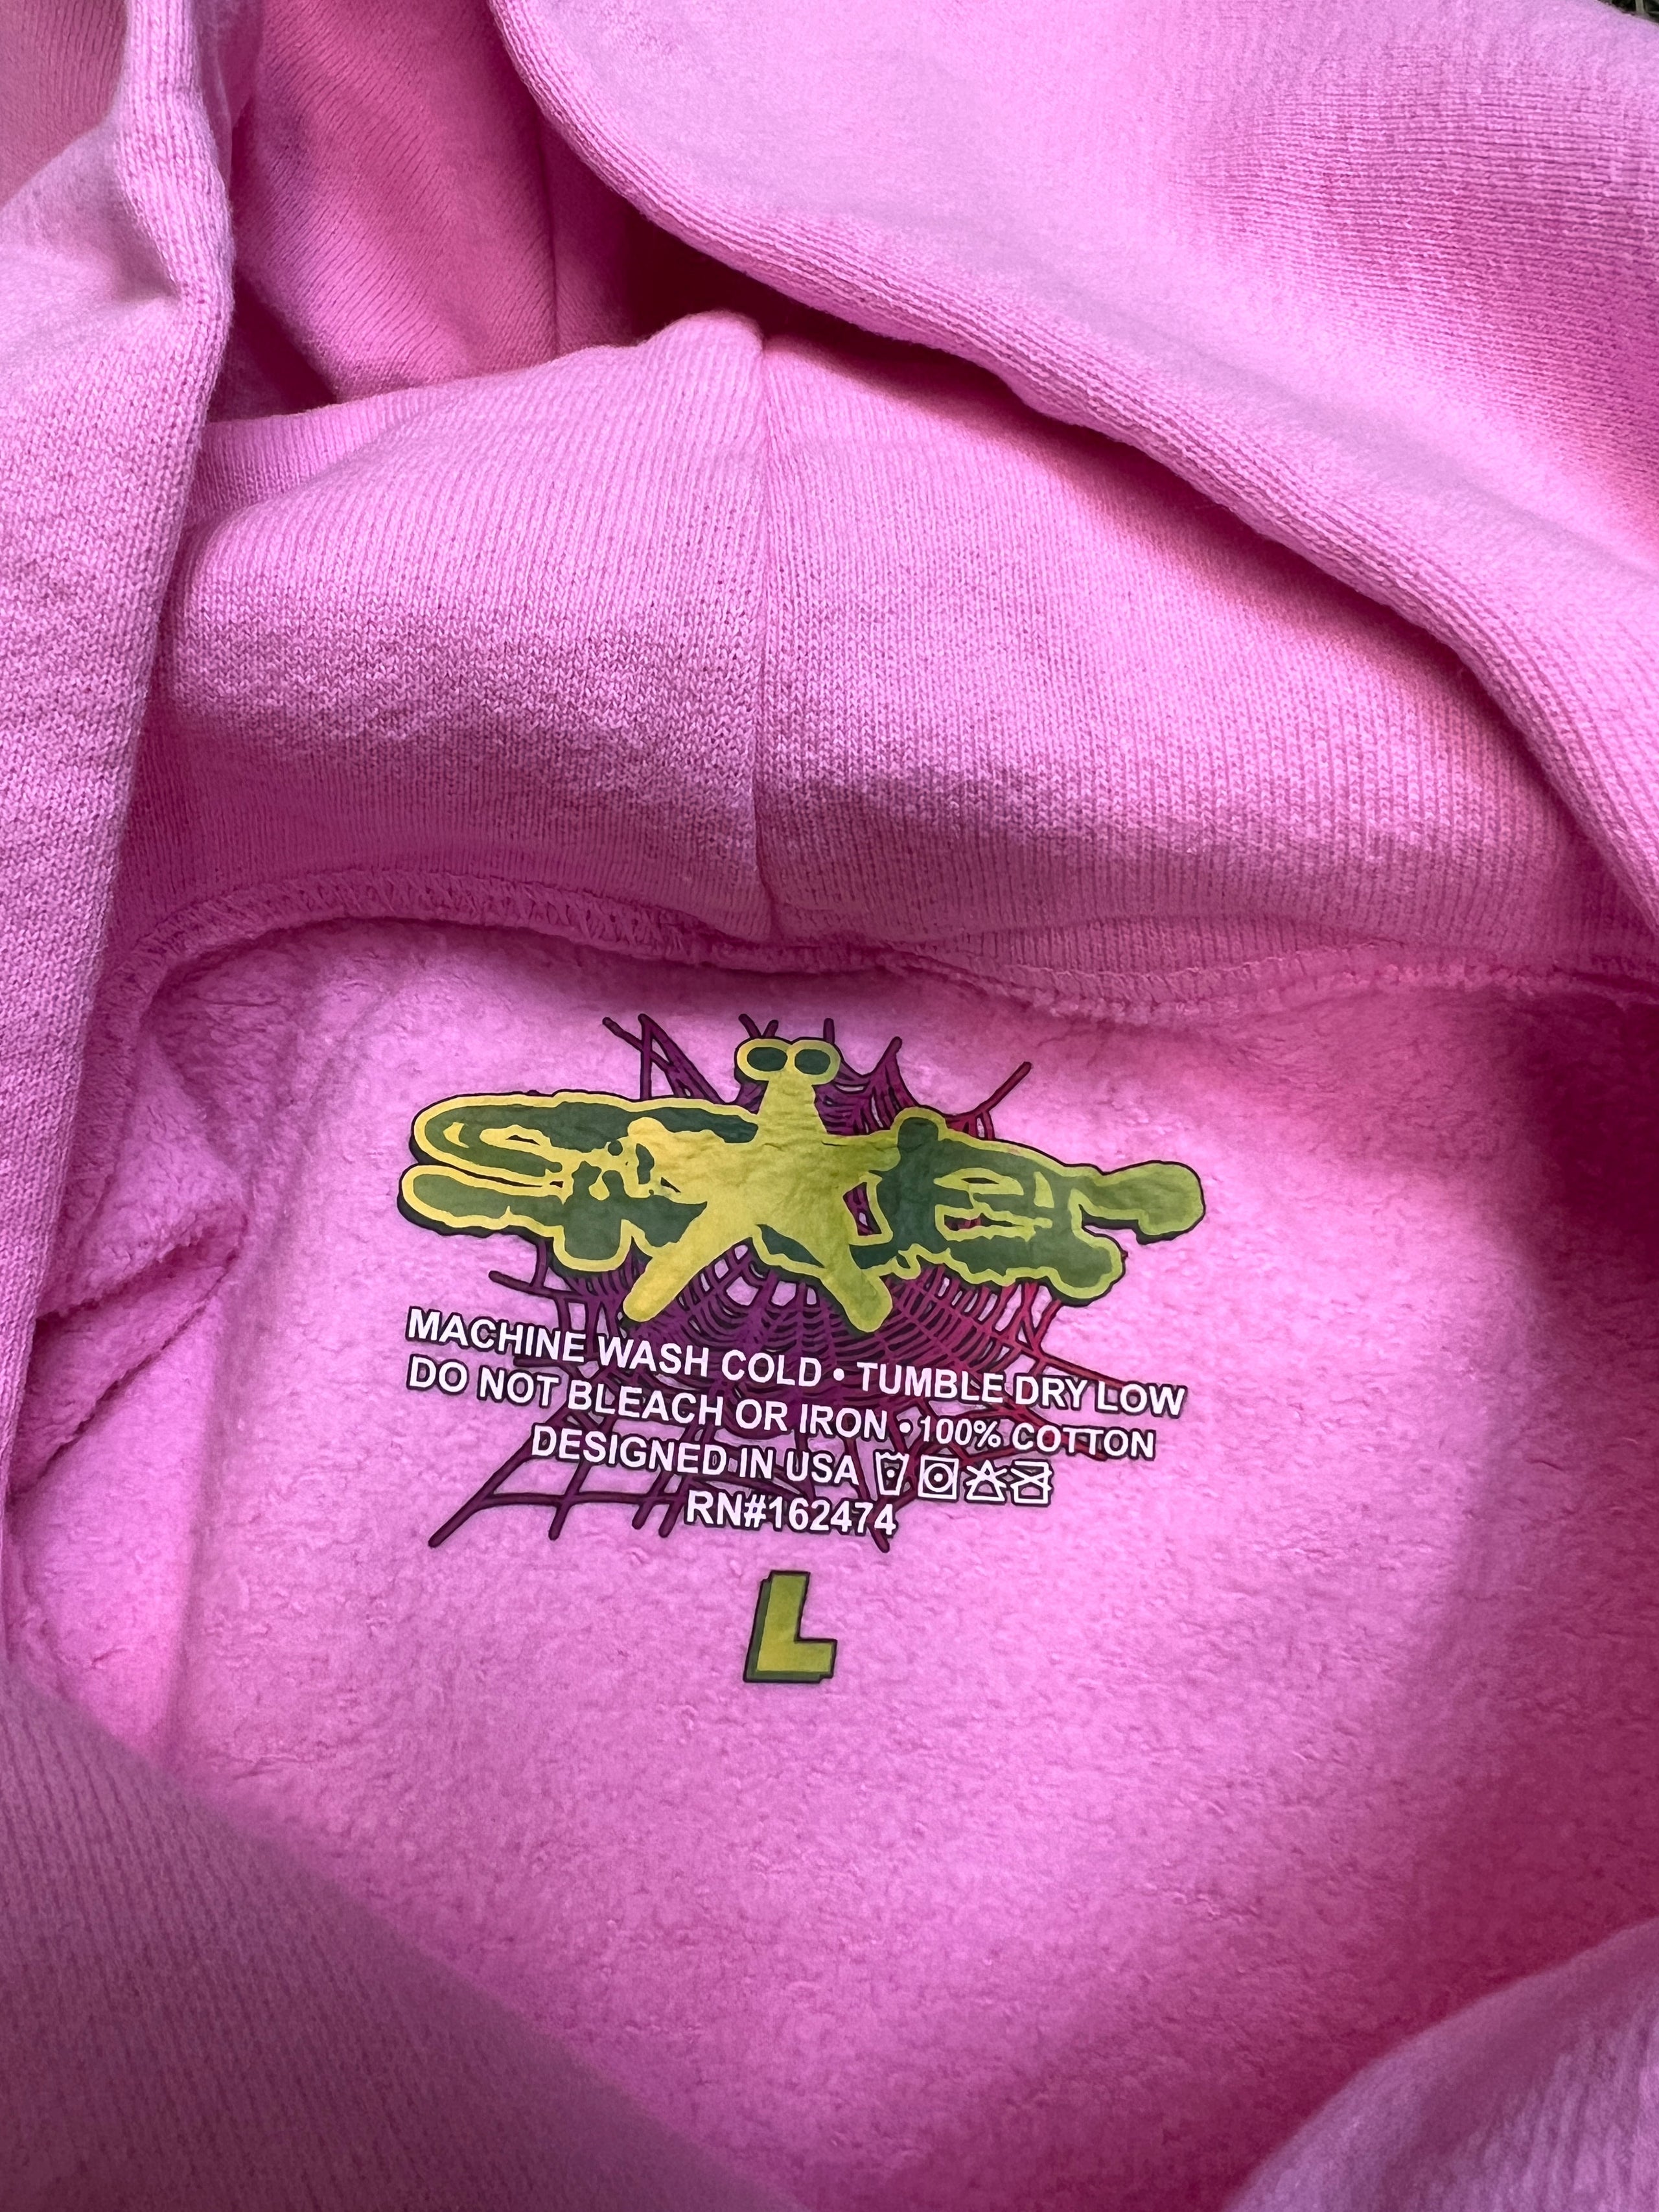 Sp5der Pink Atlanta Hoodie Size Large NEW x7550